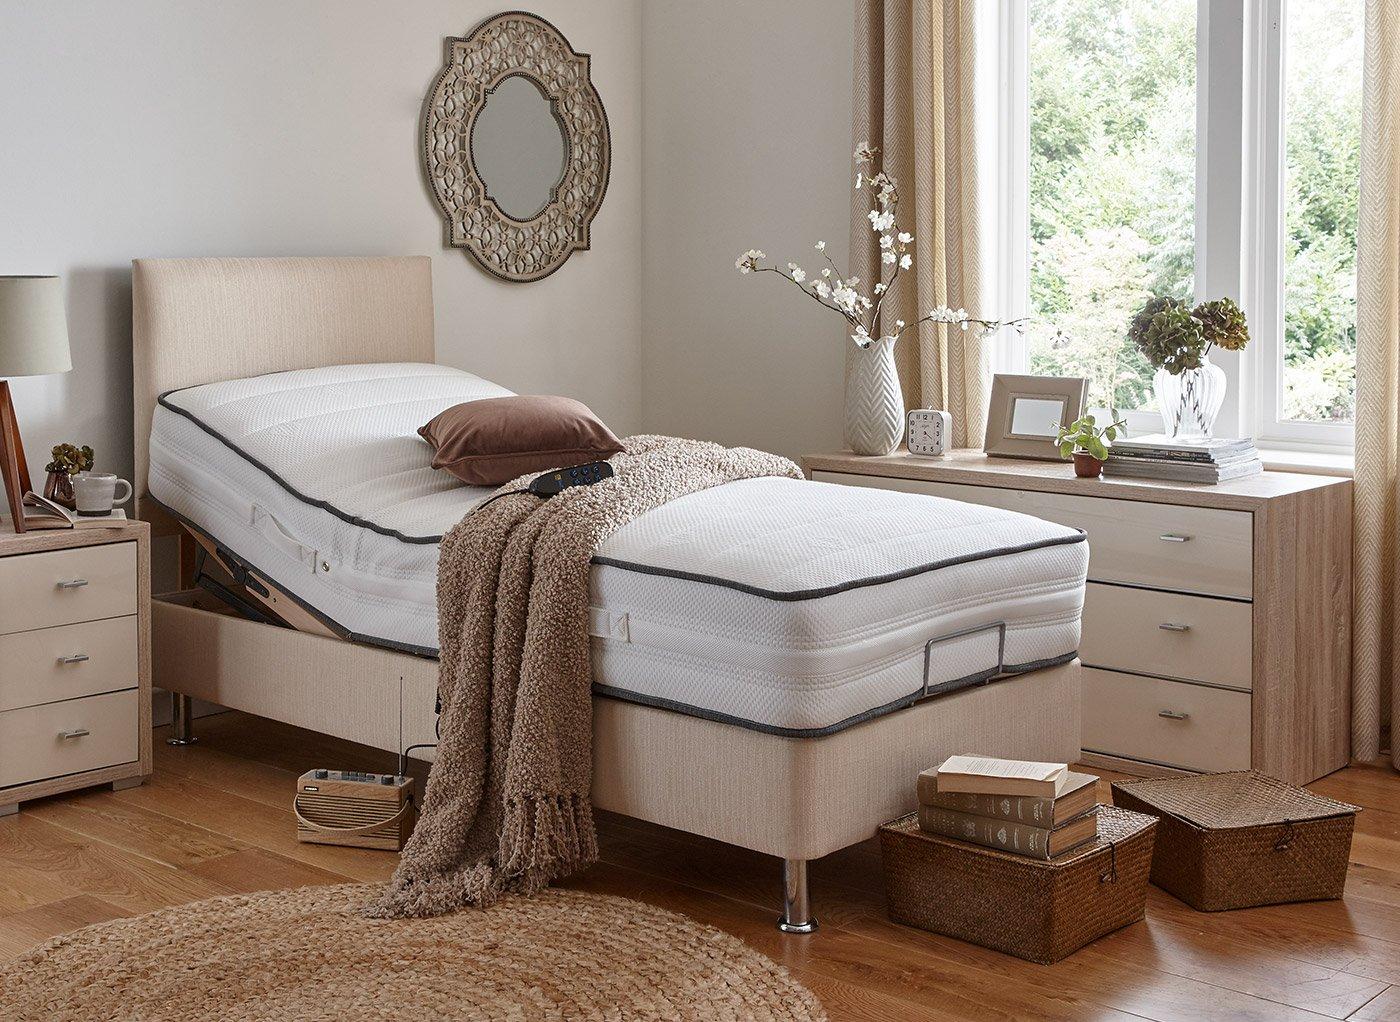 fontwell mattress with standard grey adjustable divan bed